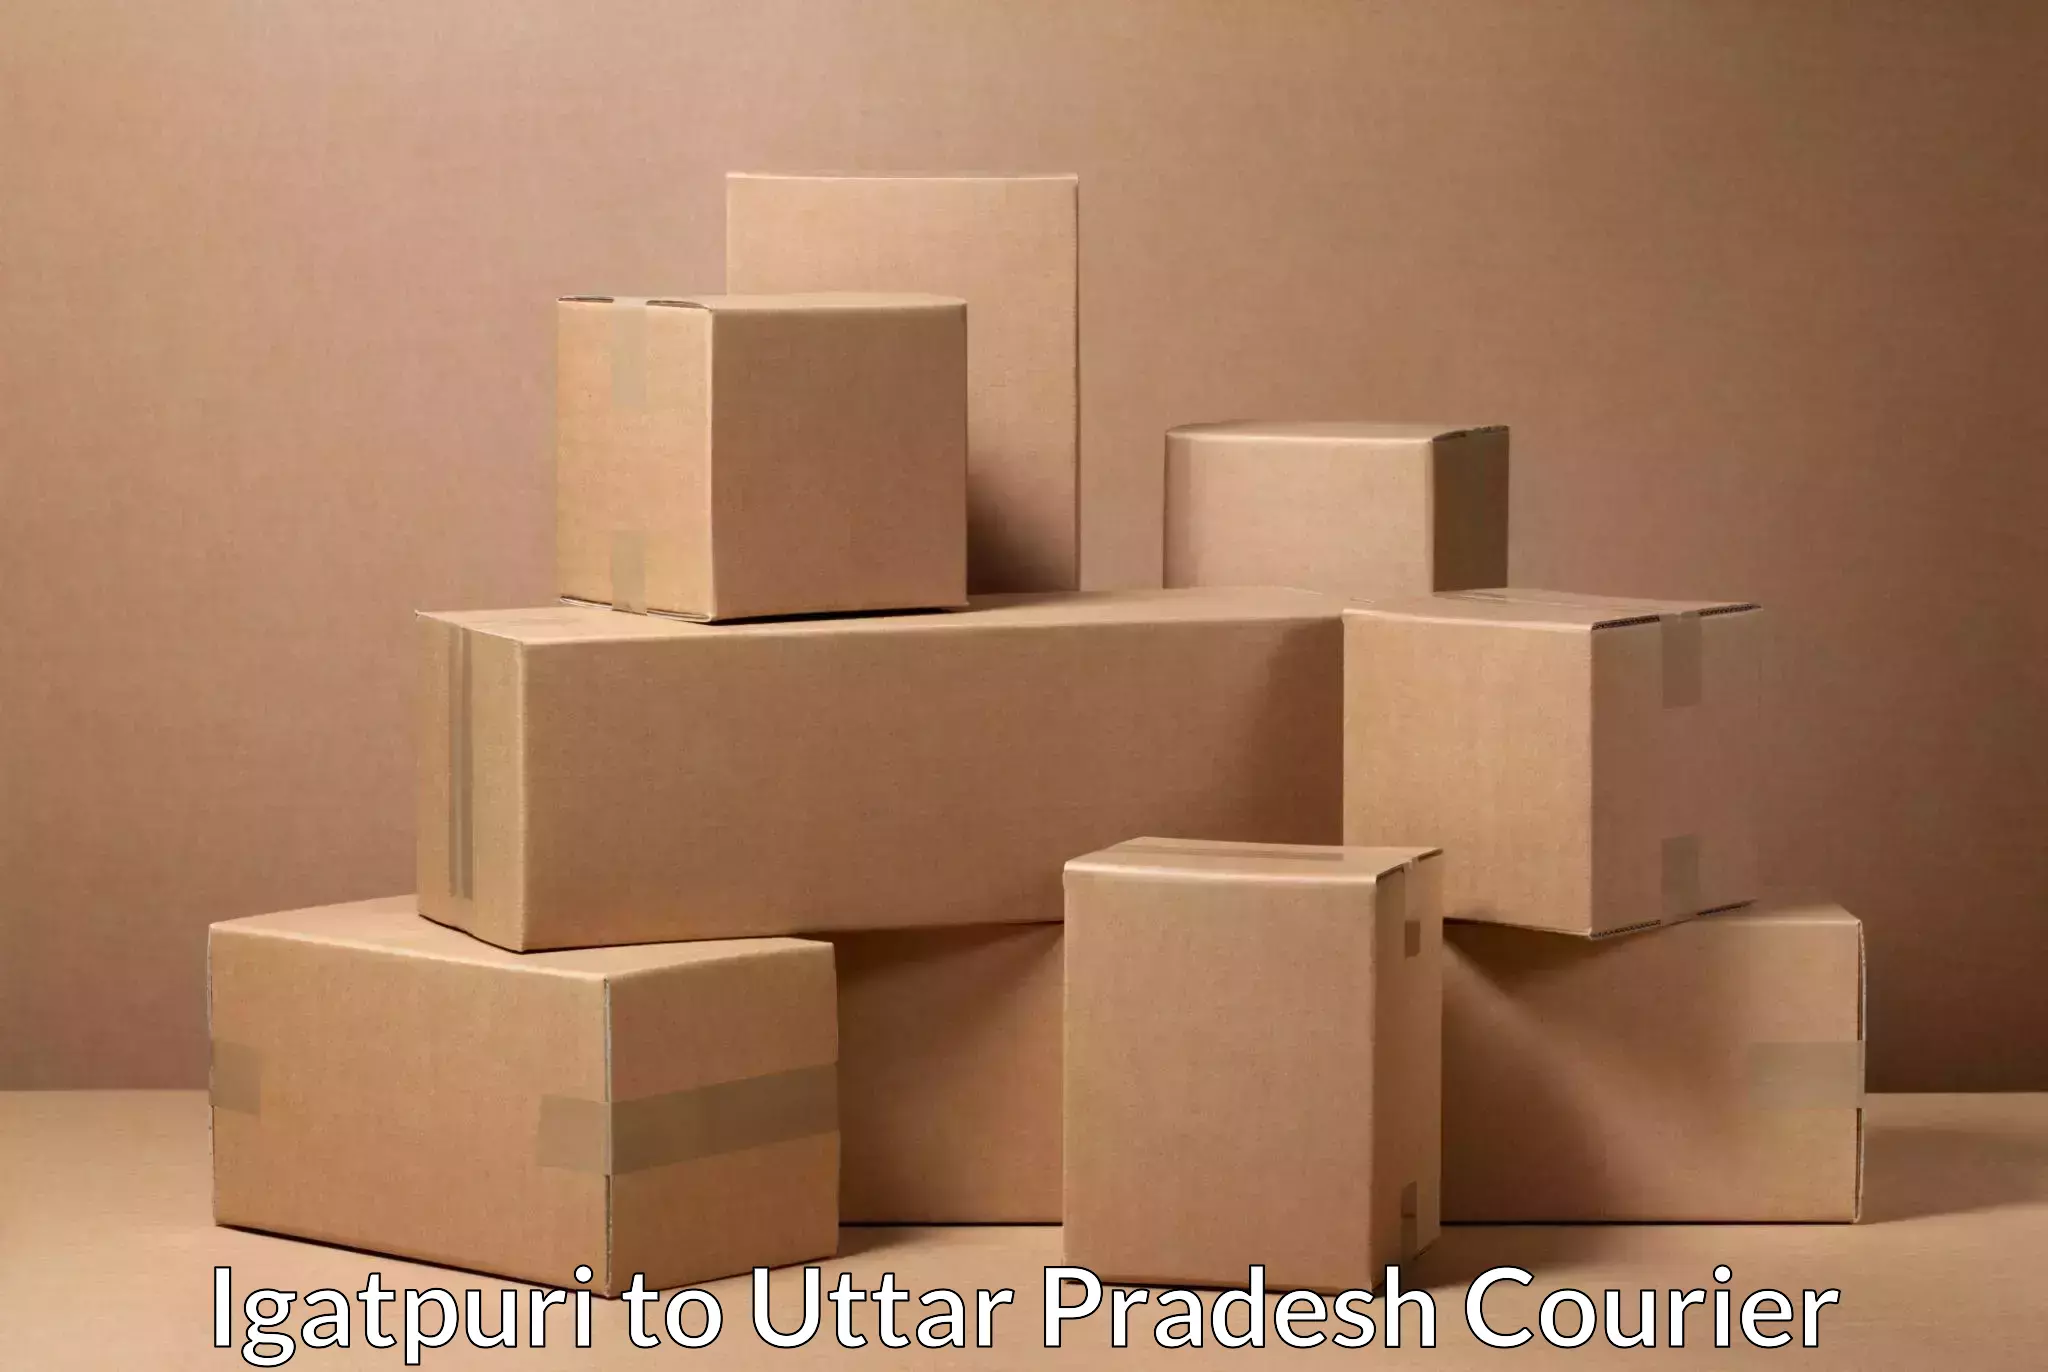 Quality courier partnerships Igatpuri to Agra